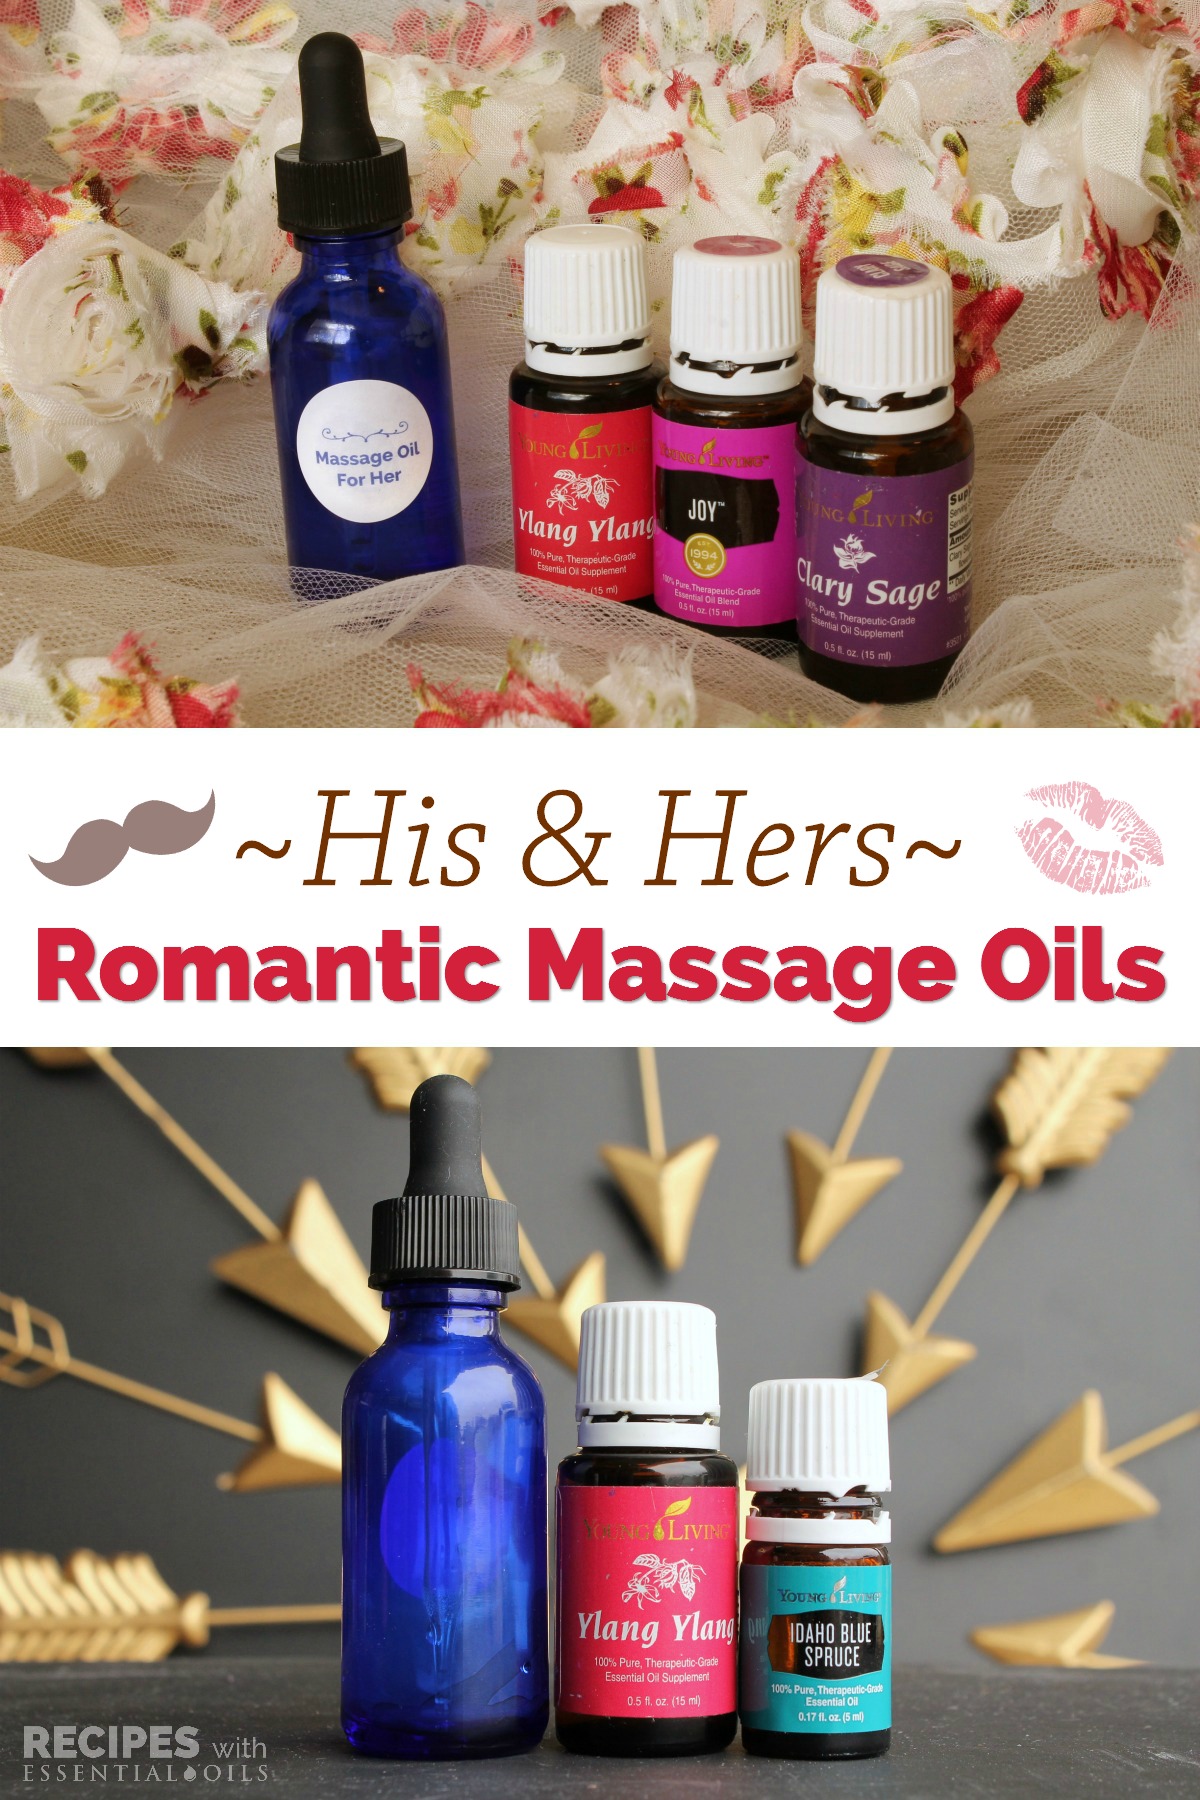 His & Hers Romantic Massage Oils from RecipeswithEssentialOils.com